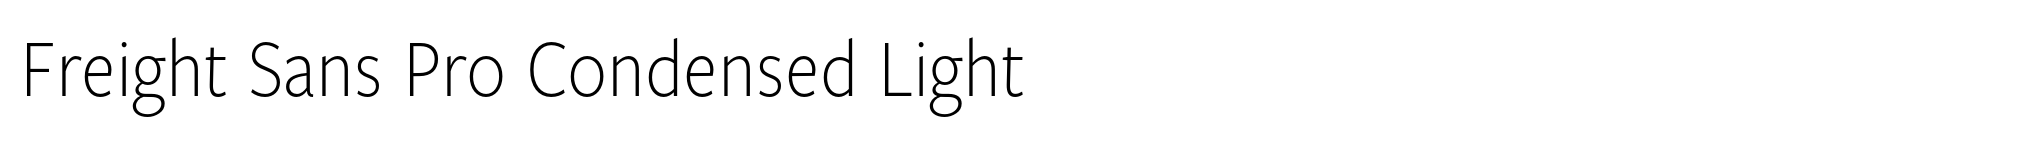 Freight Sans Pro Condensed Light image